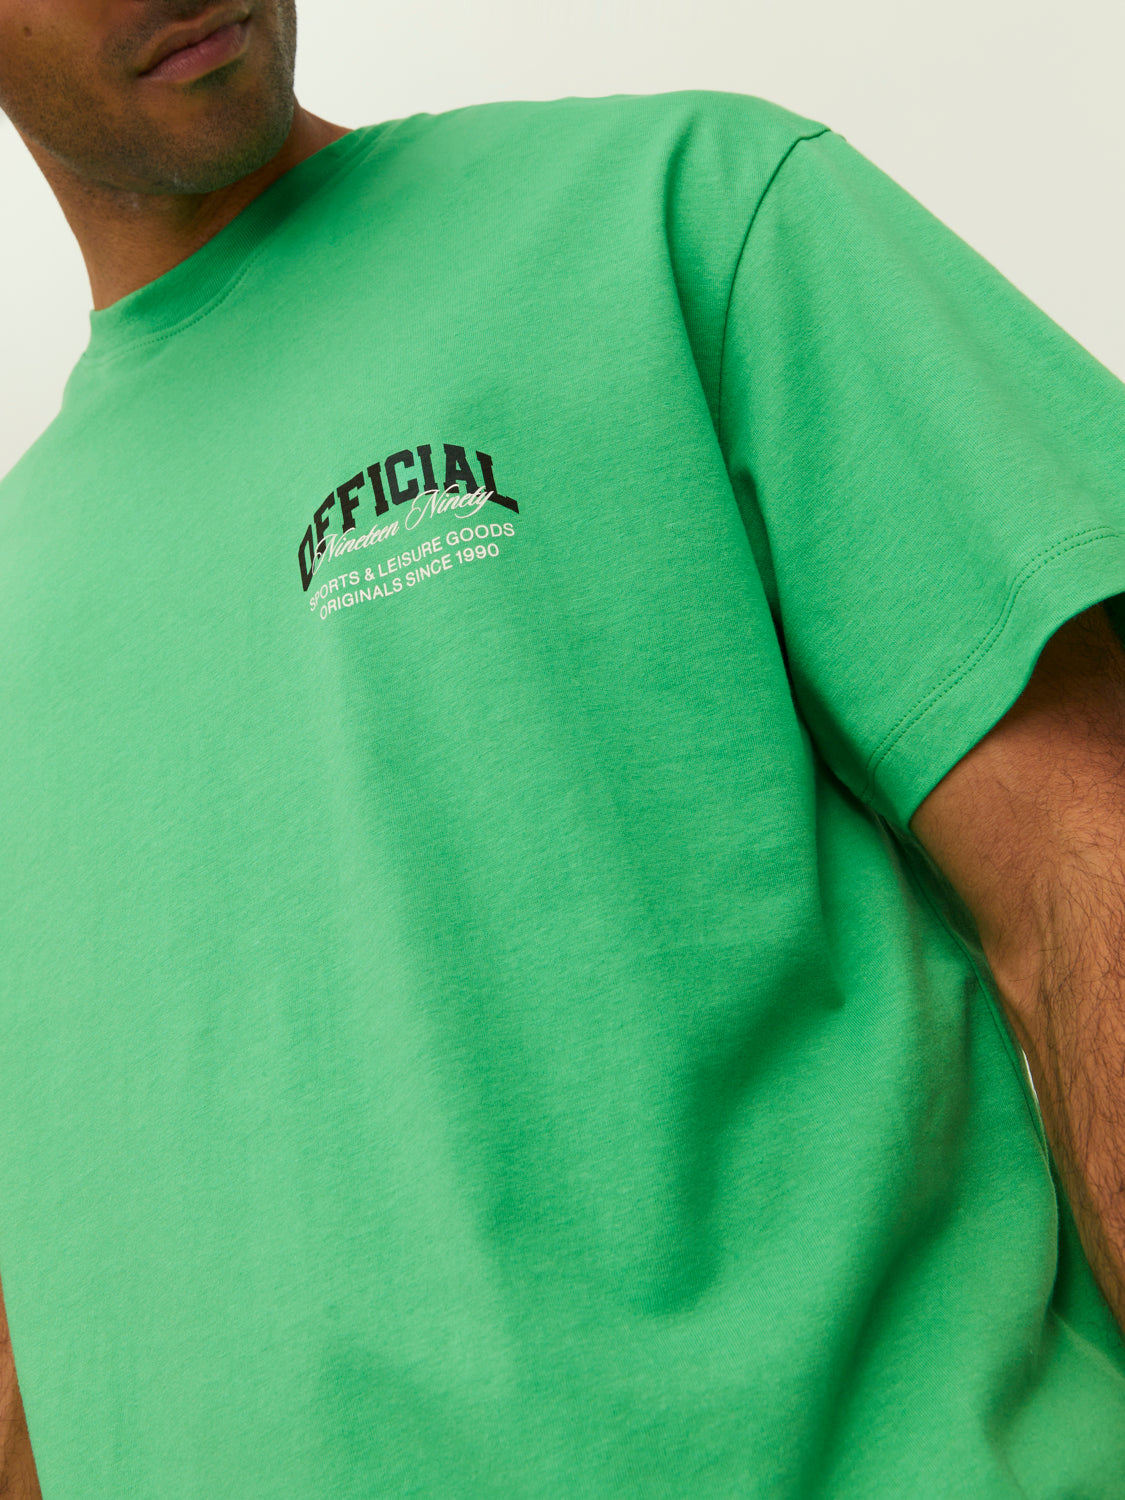 Camiseta de manga corta con estampado trasero verde - JORBRINK STUDIO BACK TEE SS CREW NECK